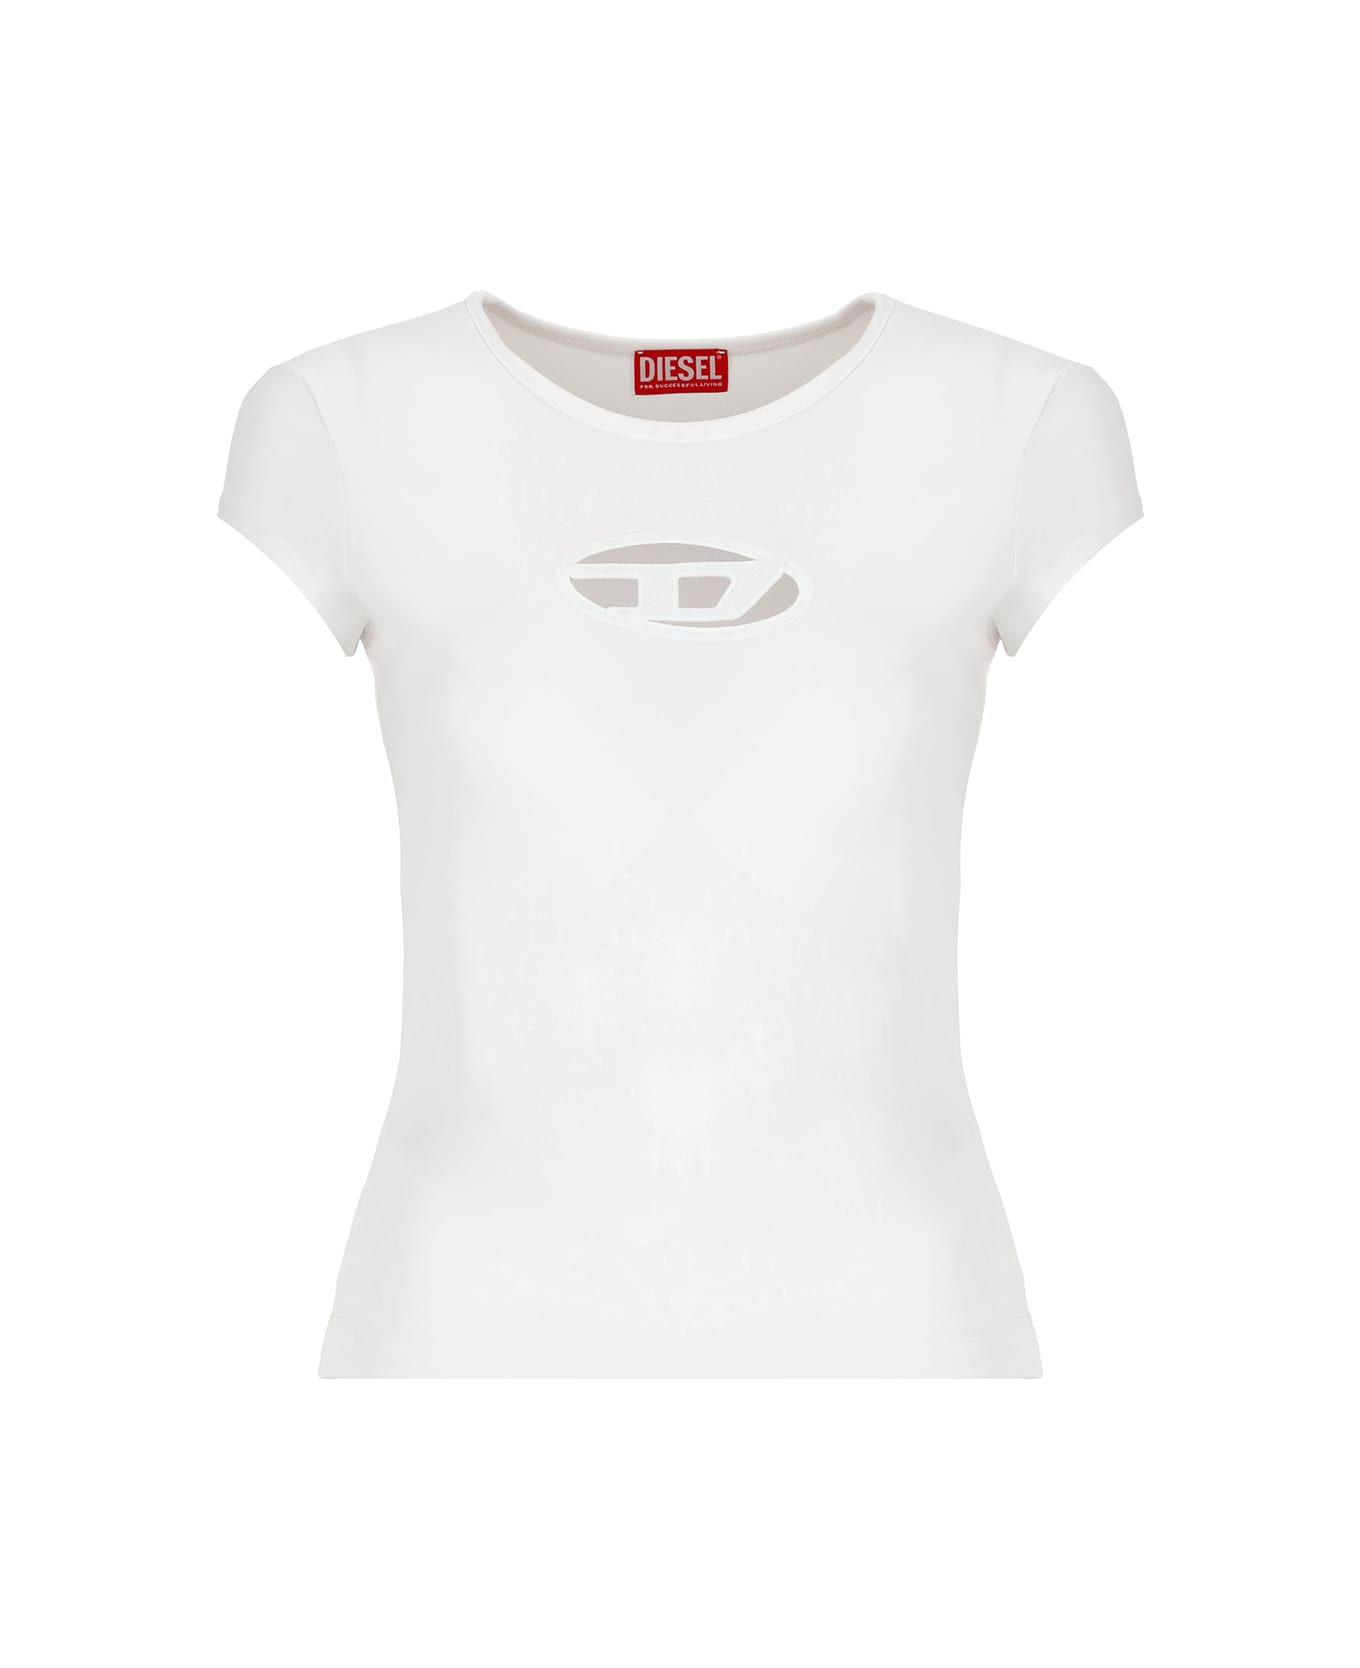 Diesel Angie T-shirt - White